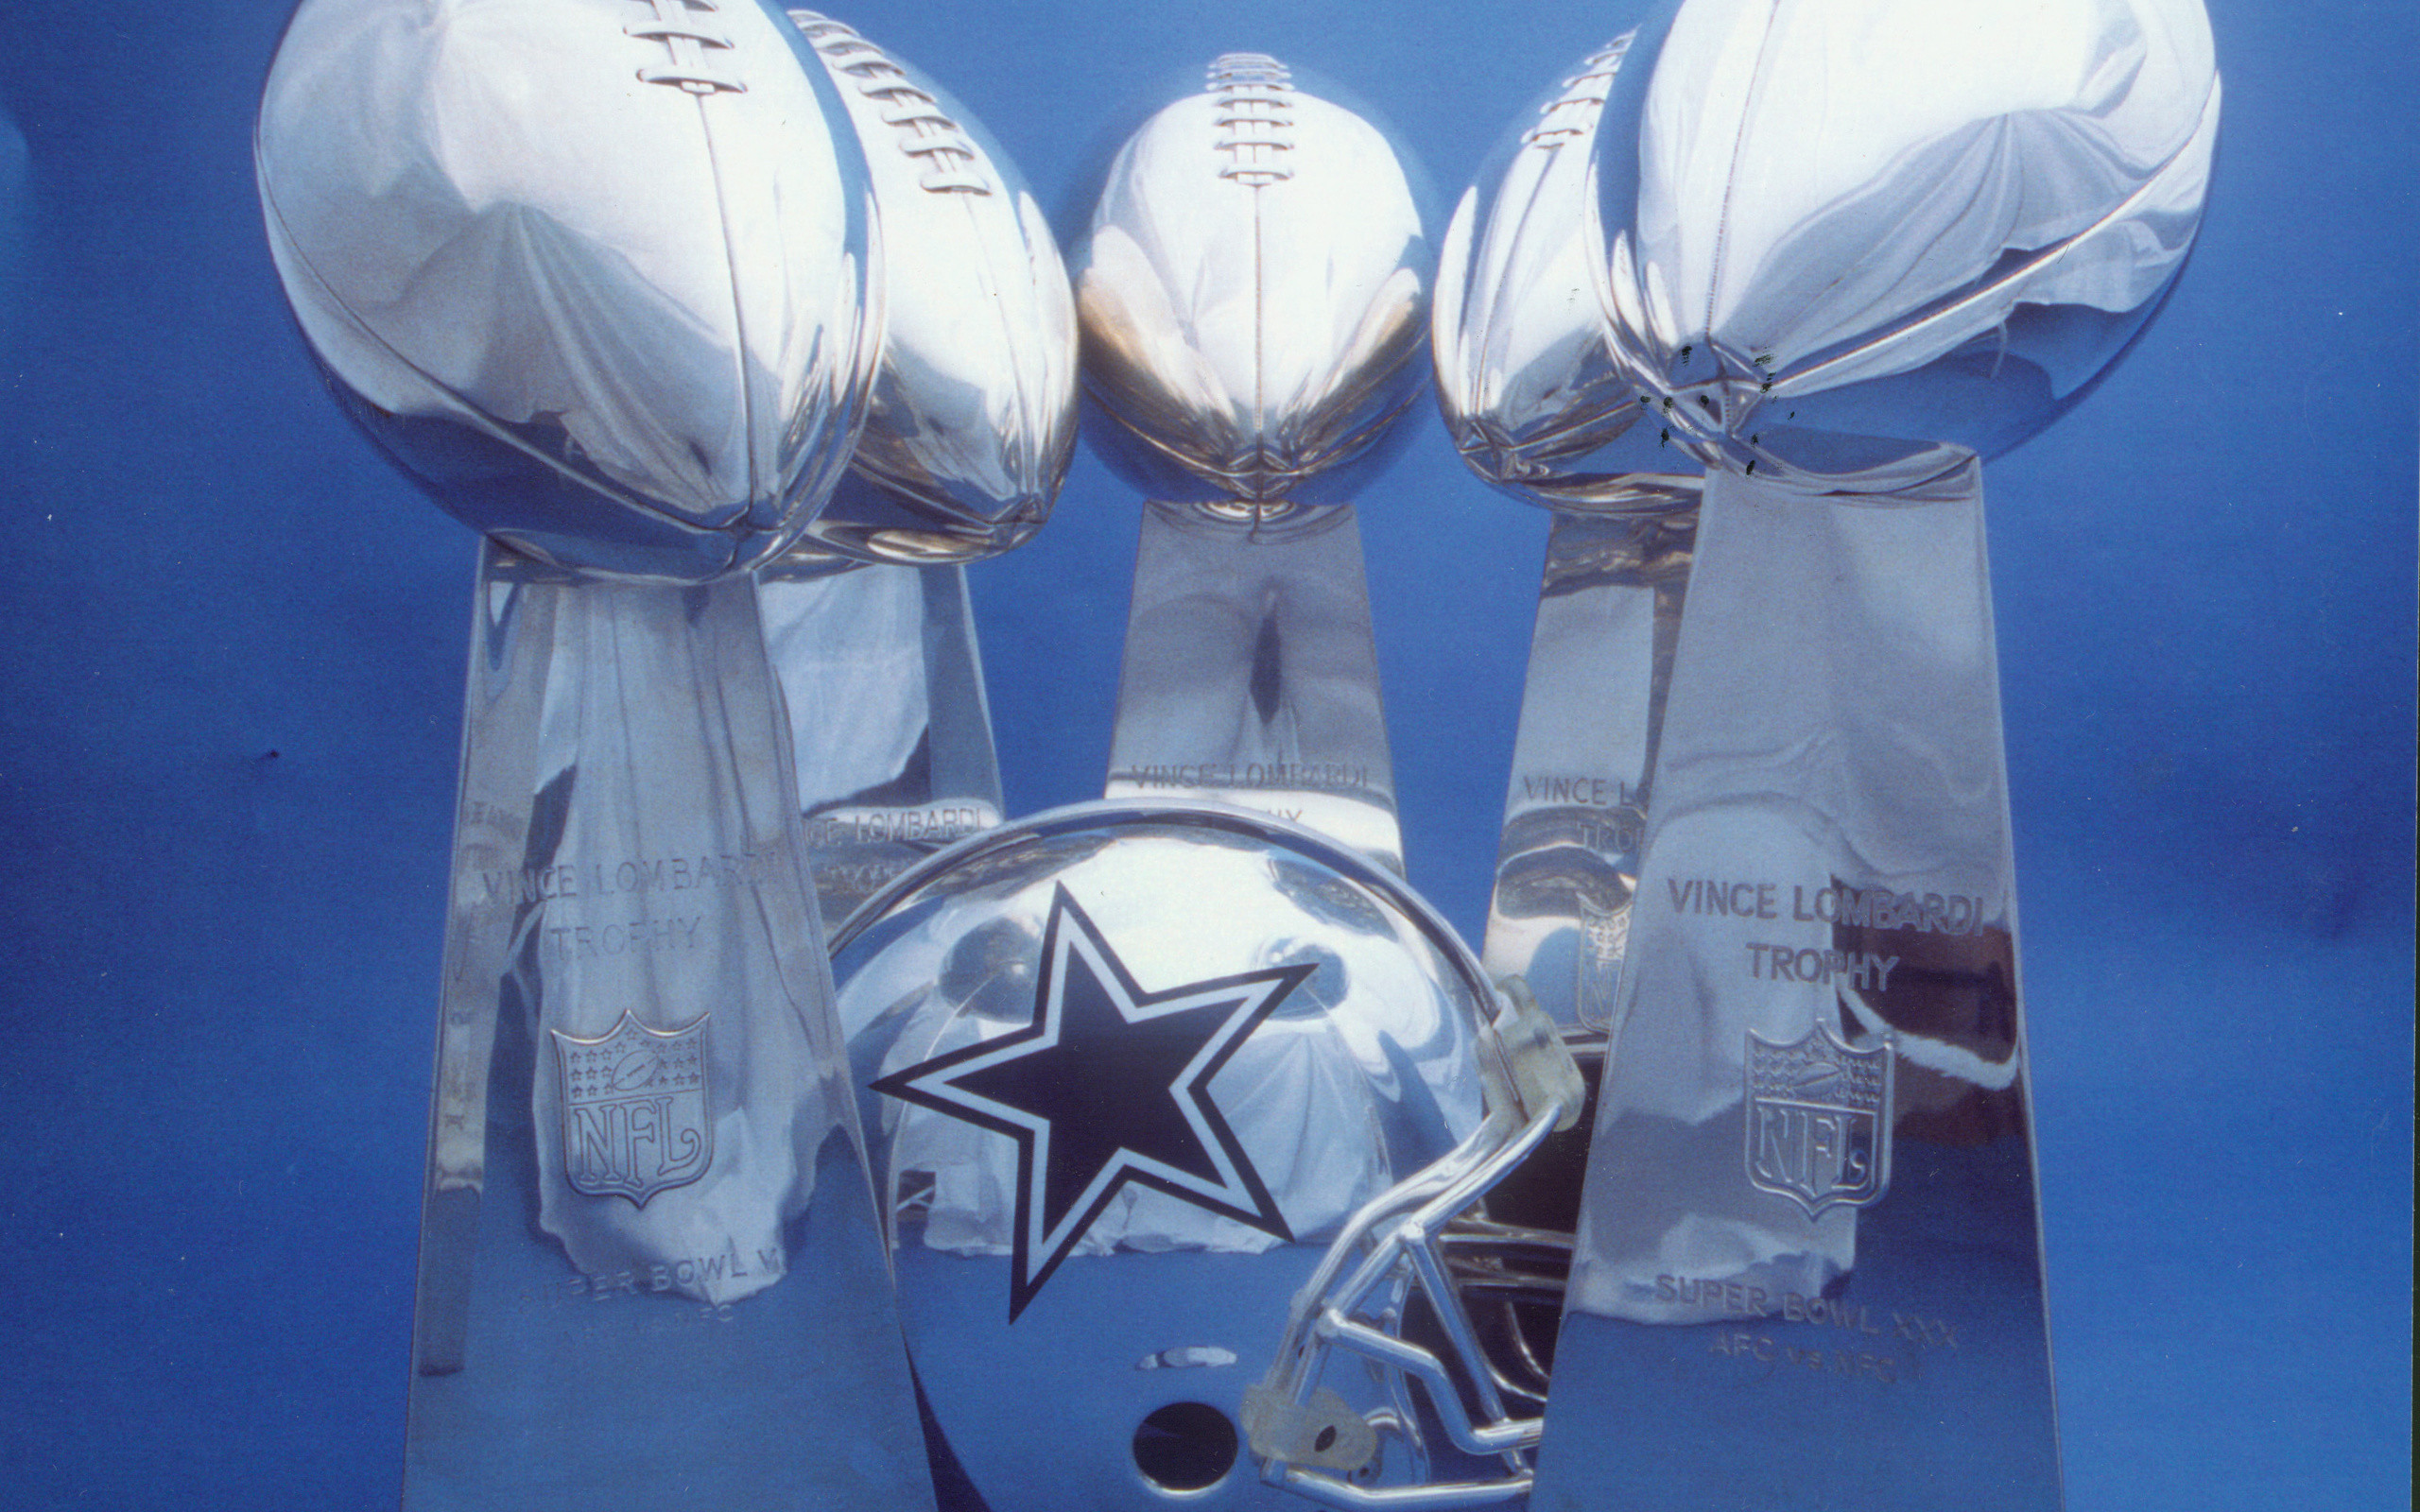 2560x1600 Dallas-Cowboys-for-iPhone-wallpaper-wp4403956